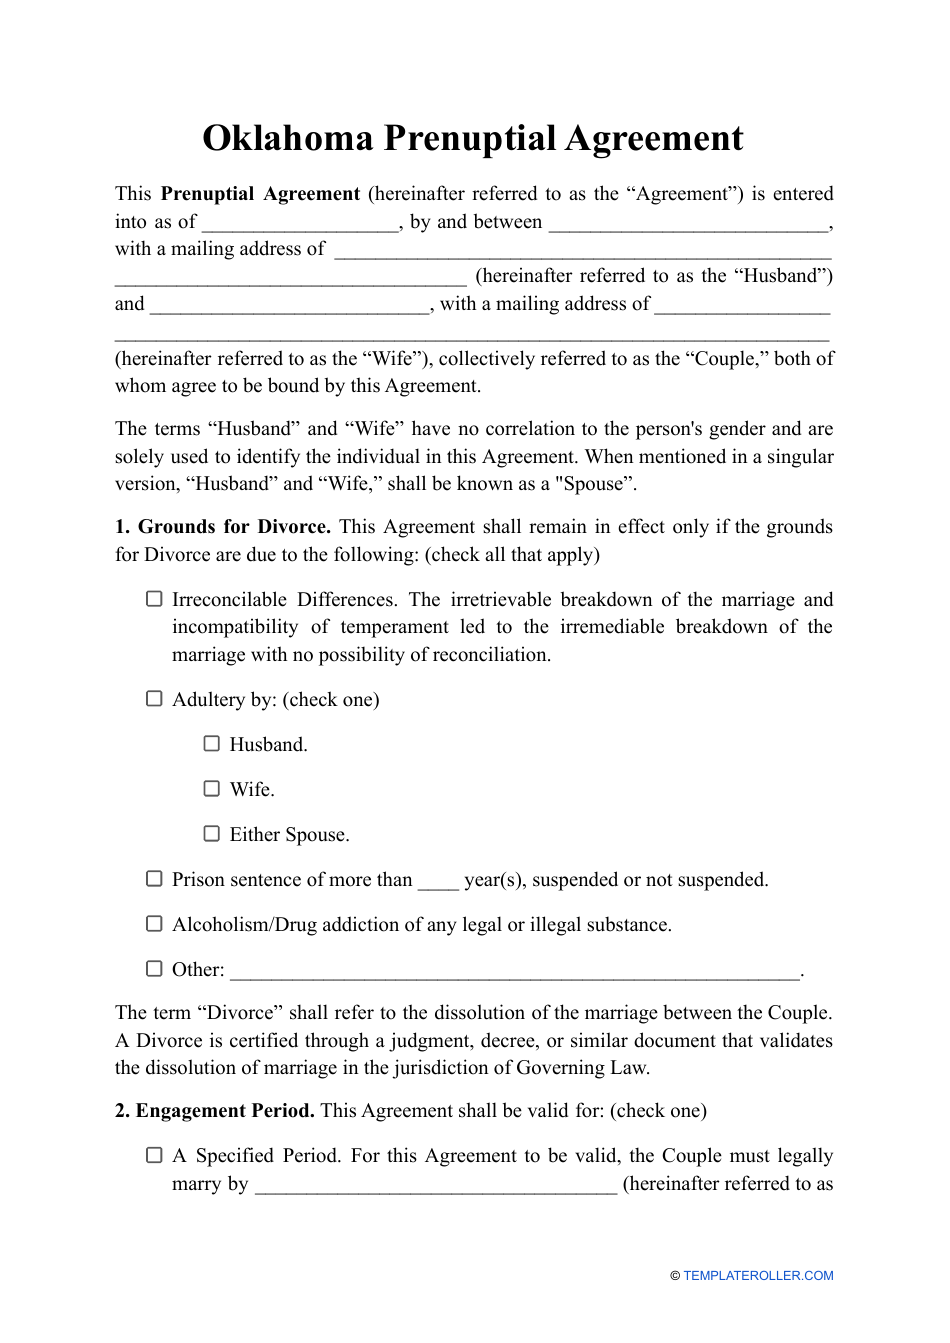 Prenuptial Agreement Template - Oklahoma, Page 1